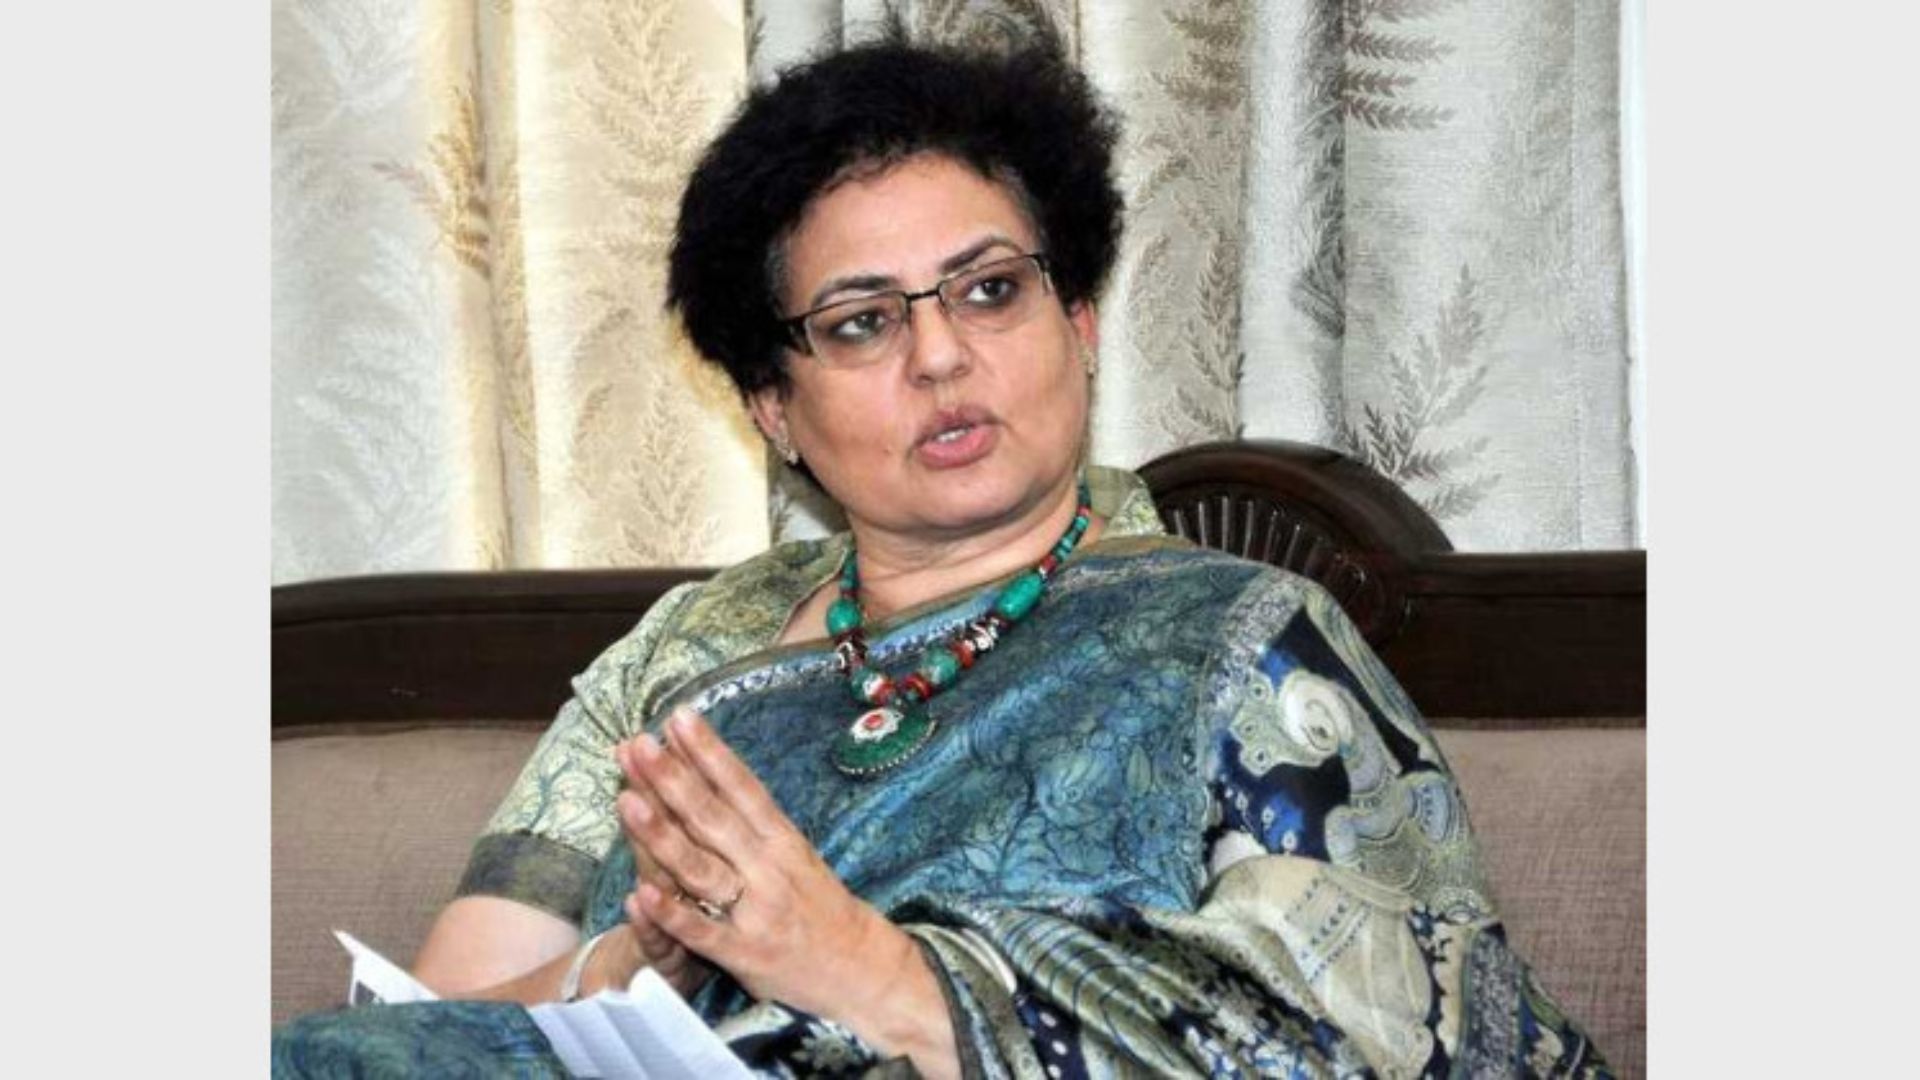 NCW Chief Rekha Sharma Calls For Uniform Personal Laws For Women Across All Religions